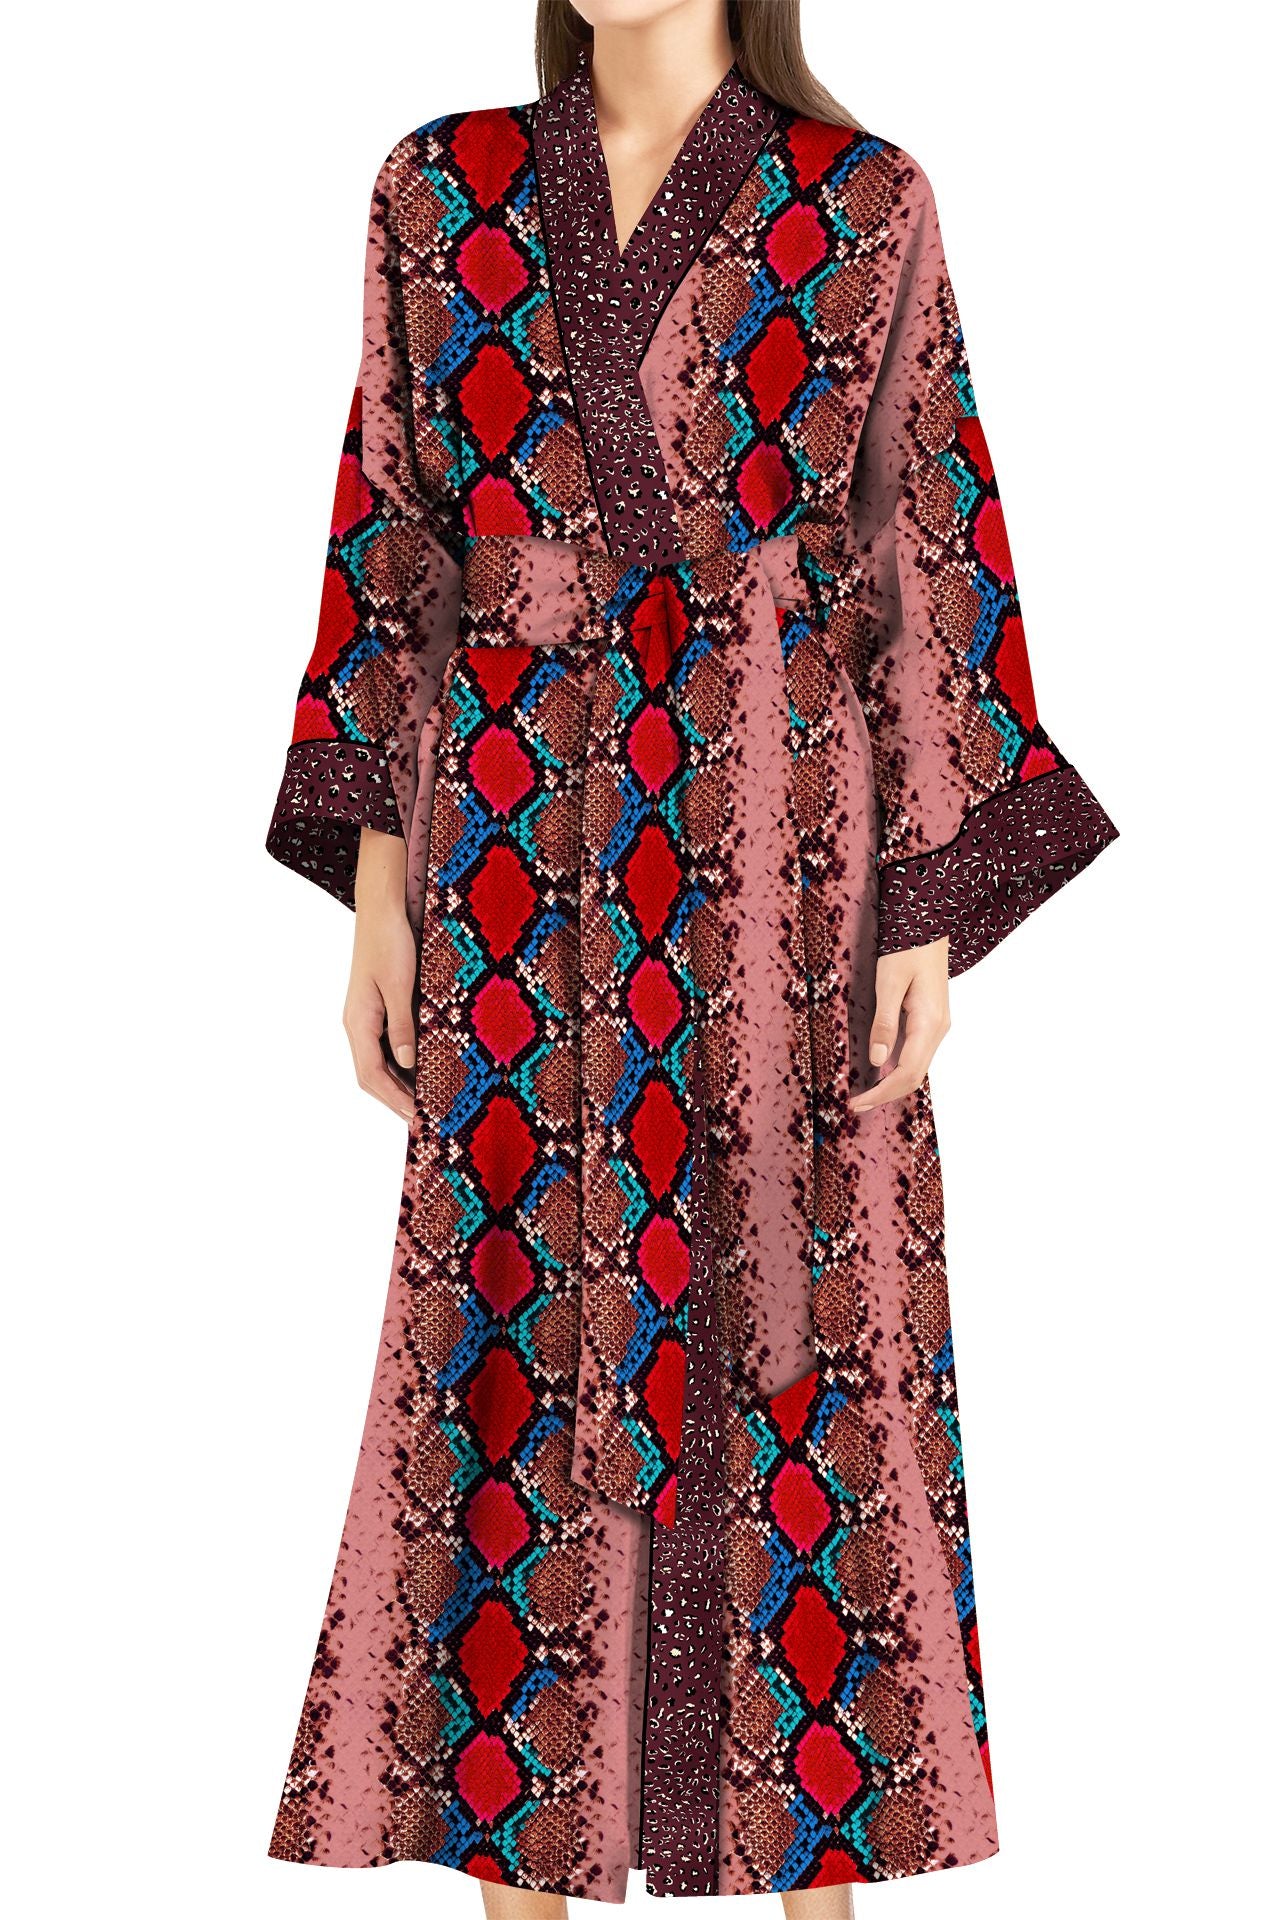 Vegan Silk Kimono Solid Blood Stone Robe in Midi Length